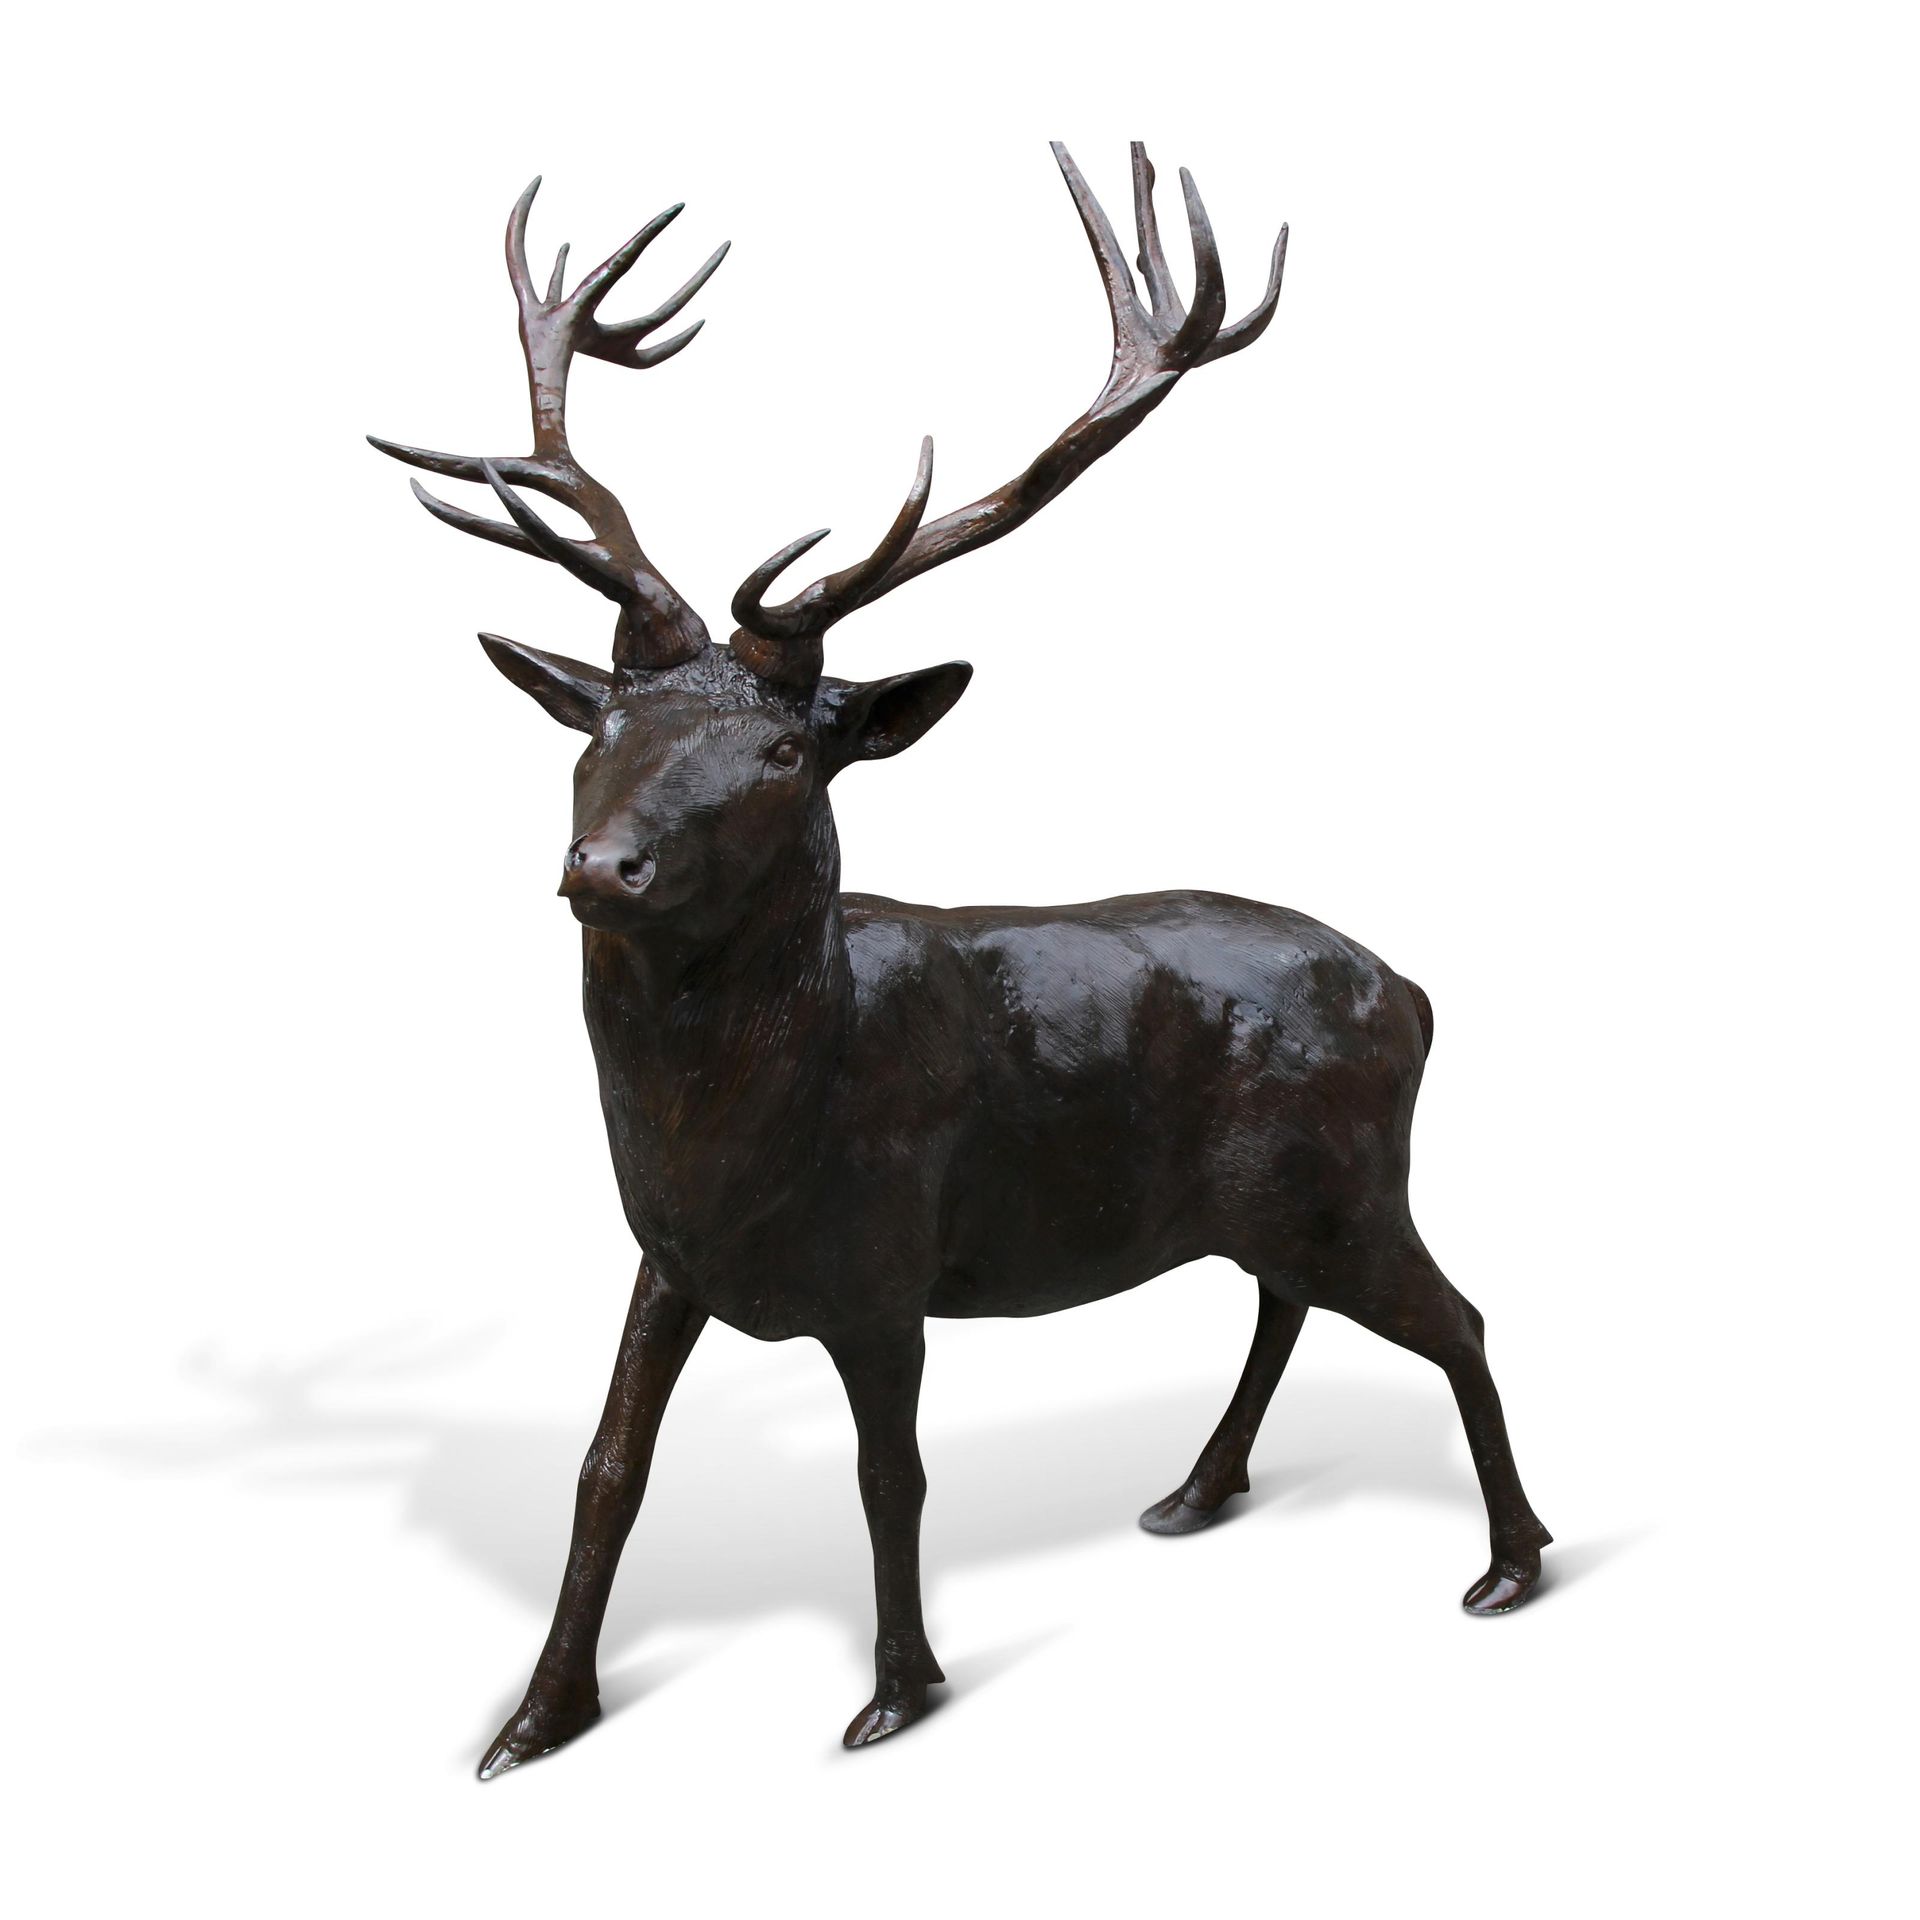 Null 1 Statua di un grande cervo in bronzo.

Dimensioni: L40 x H200 x P50 cm



&hellip;